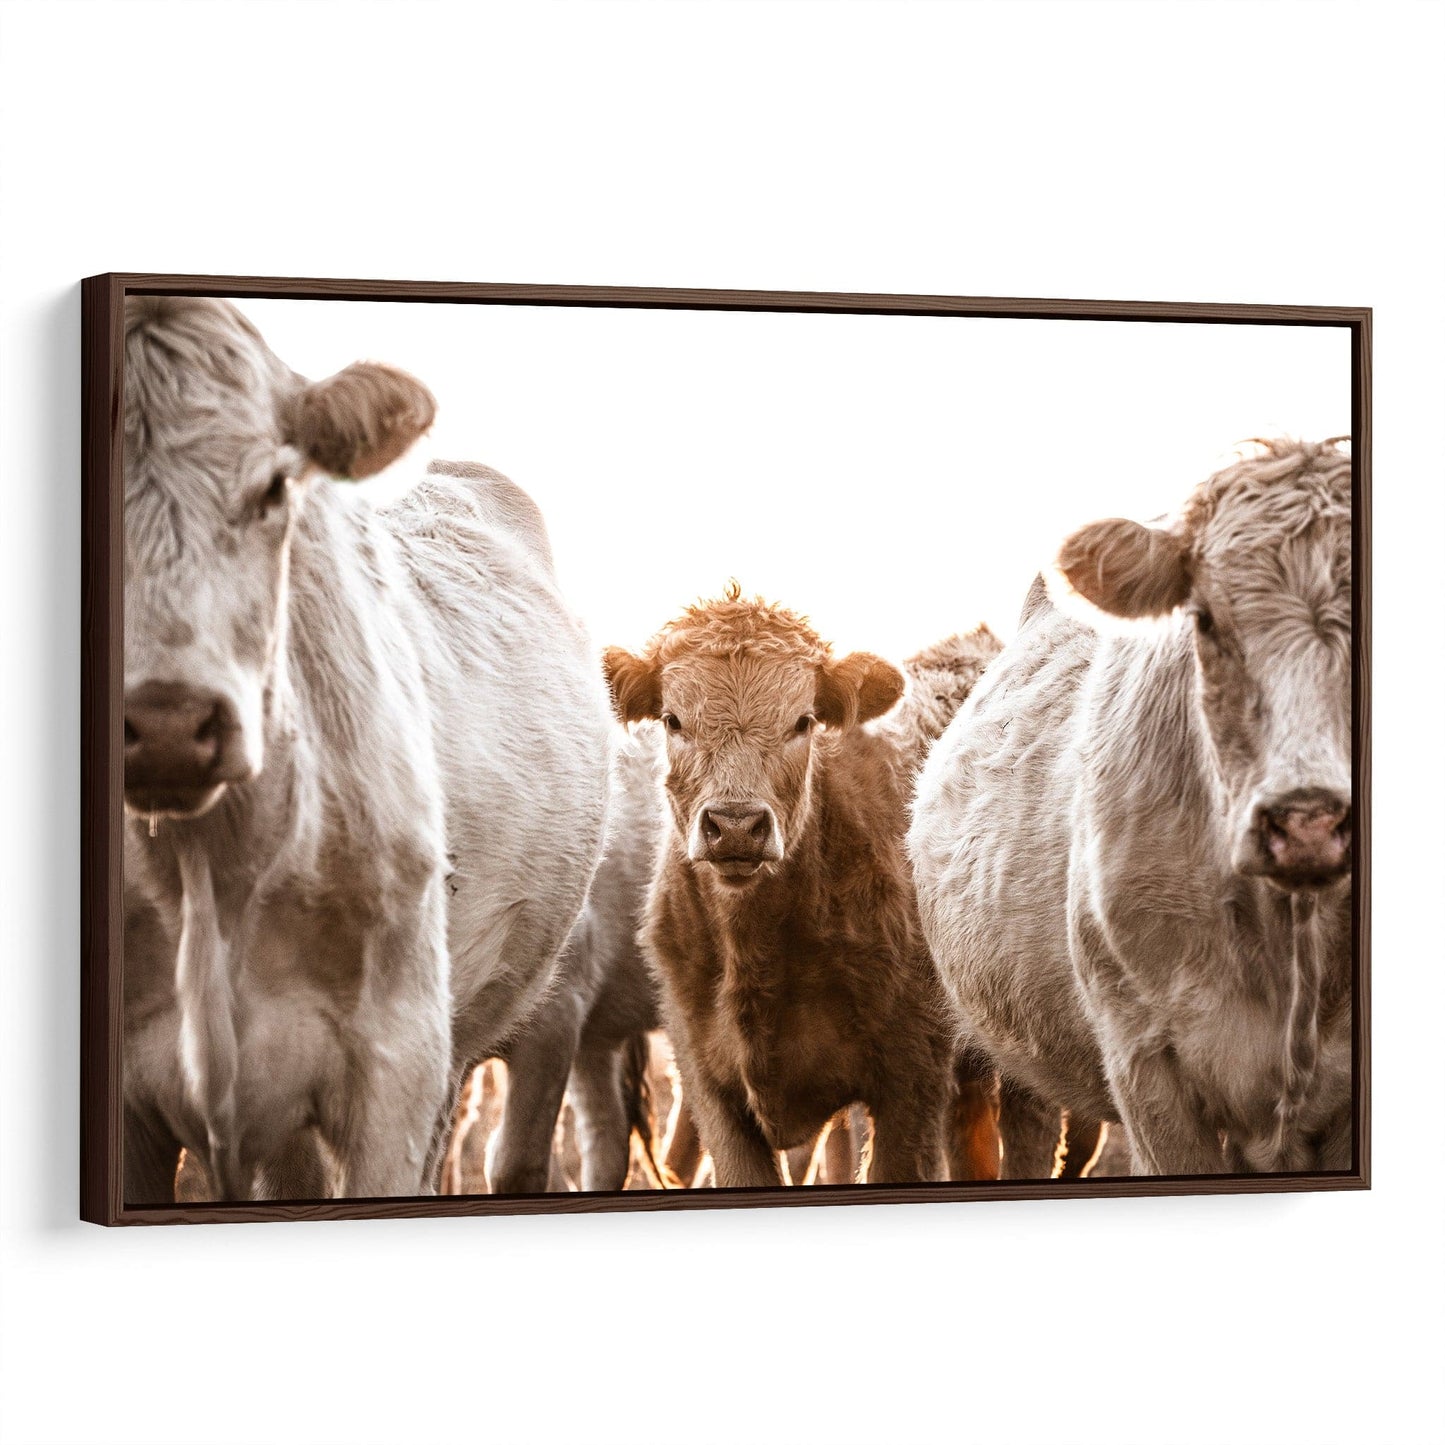 Western Cowboy Nursery Wall Art - Charolais Cows and Calf Canvas-Walnut Frame / 12 x 18 Inches Wall Art Teri James Photography